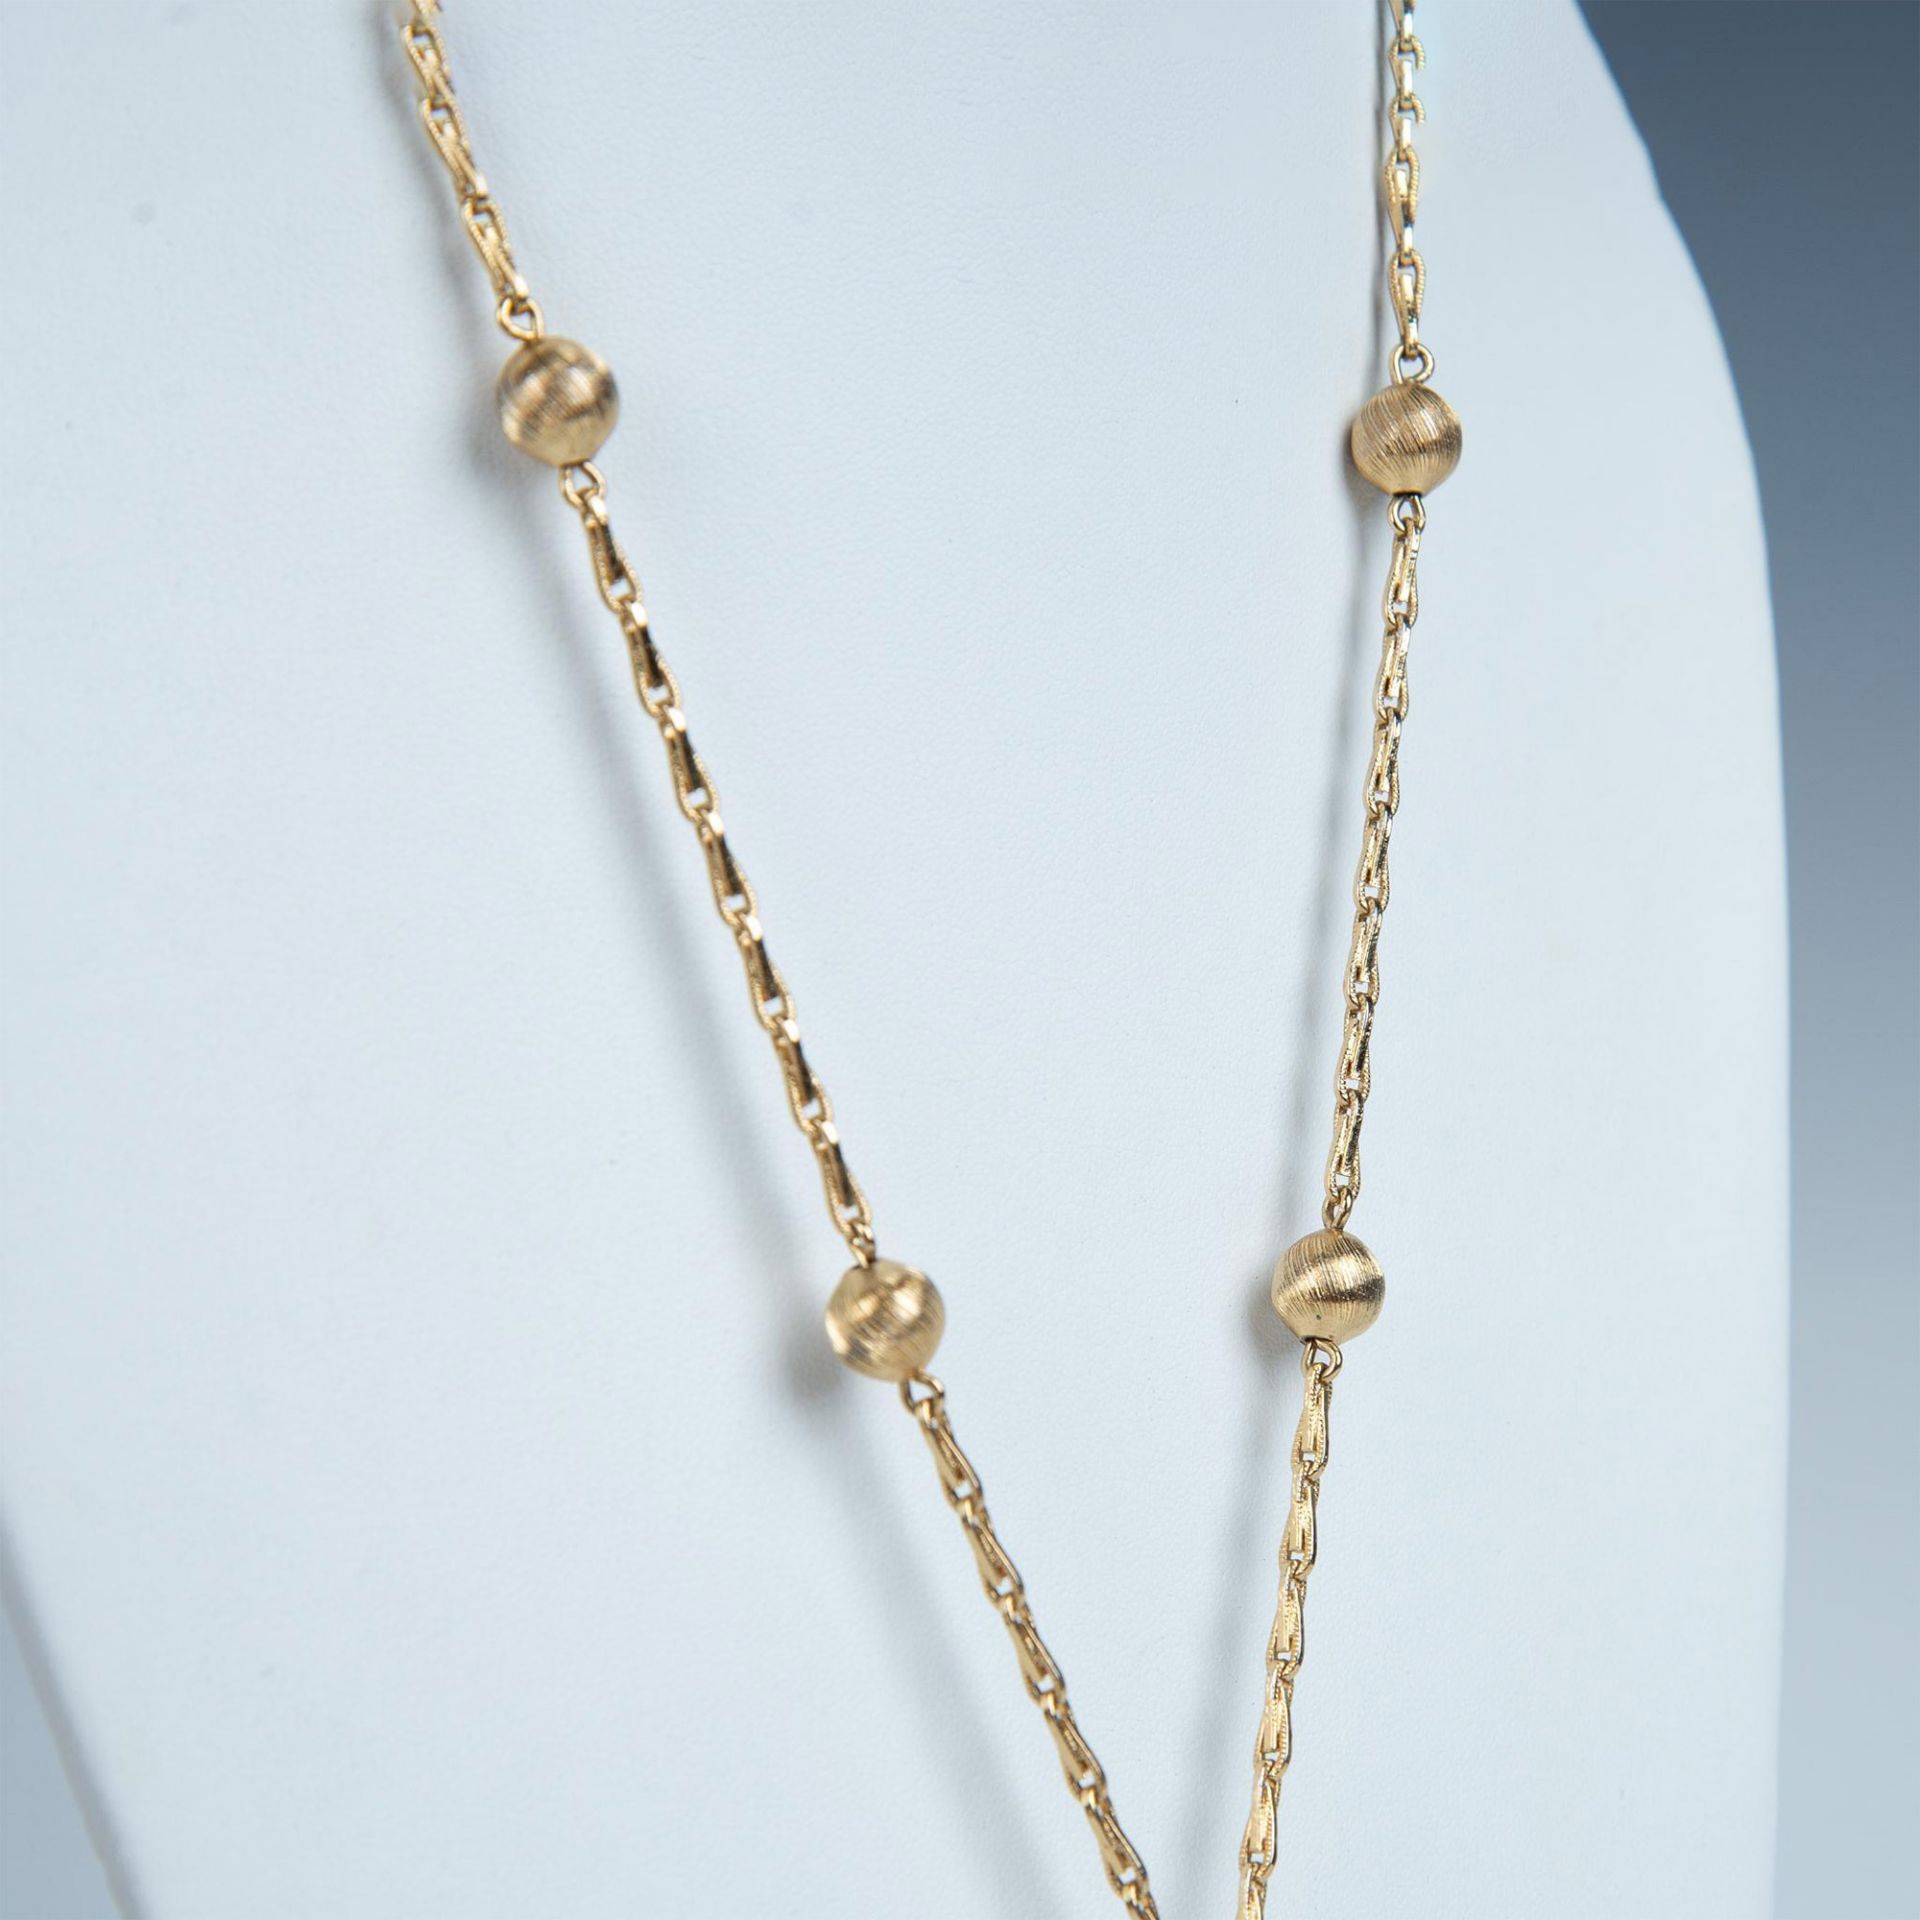 Monet Gold Metal Tassel Necklace - Image 3 of 4